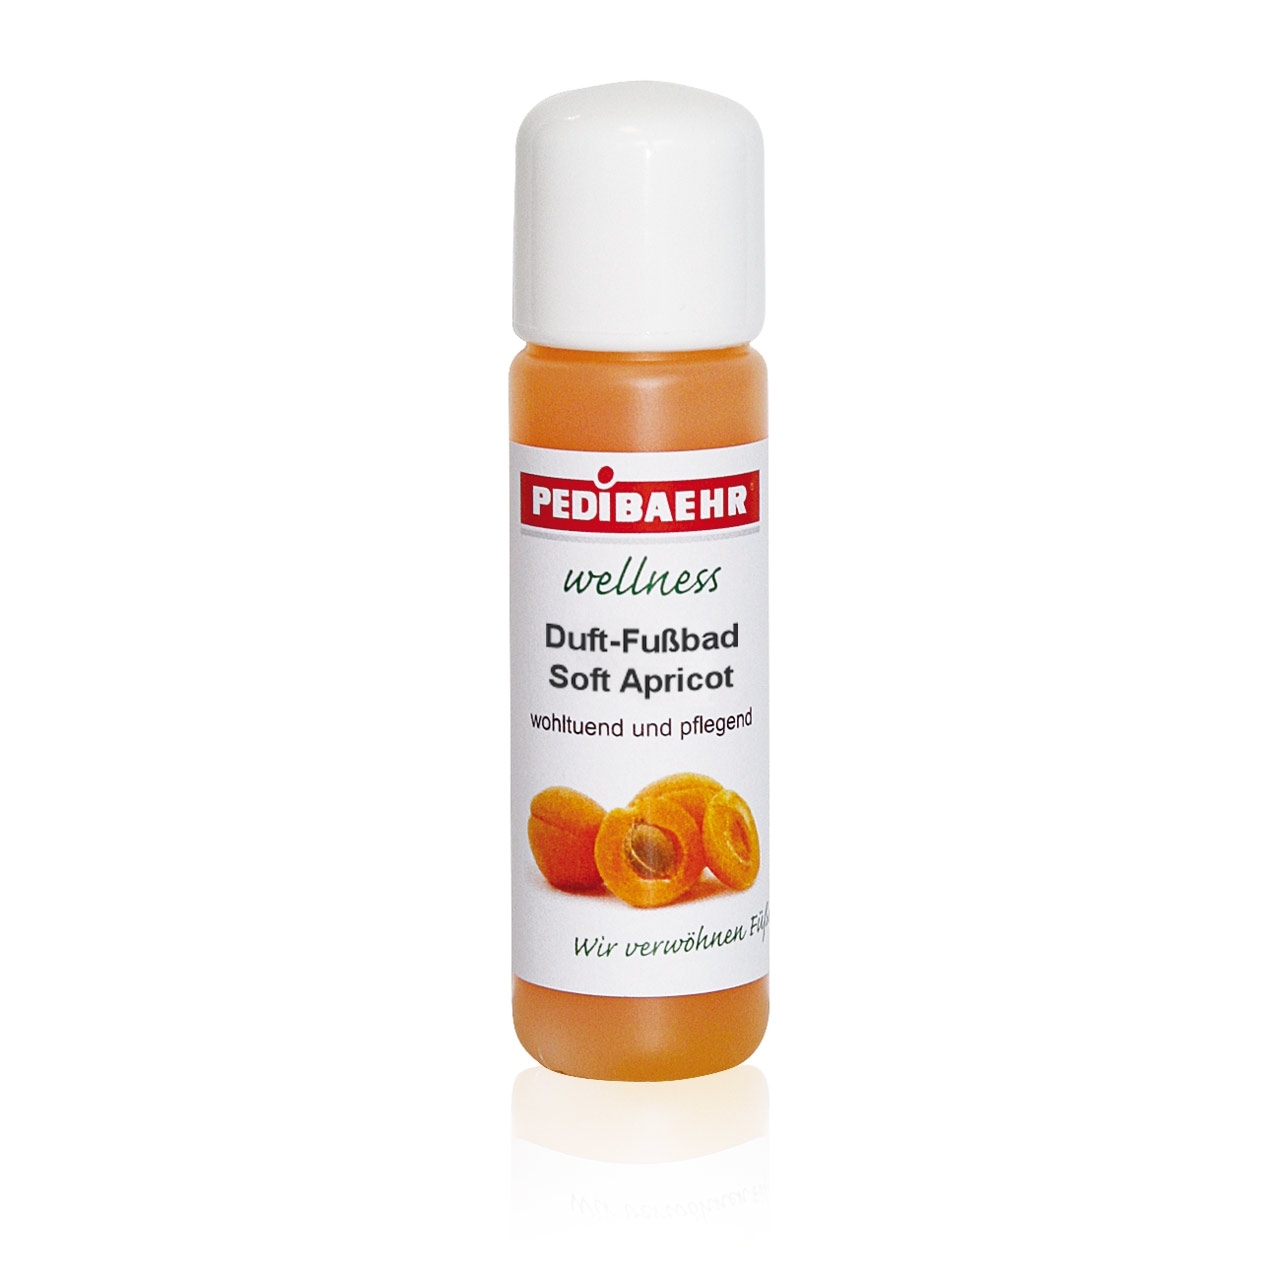 PEDIBAEHR - Wellness Duft-Fußbad Soft Apricot, 50 ml